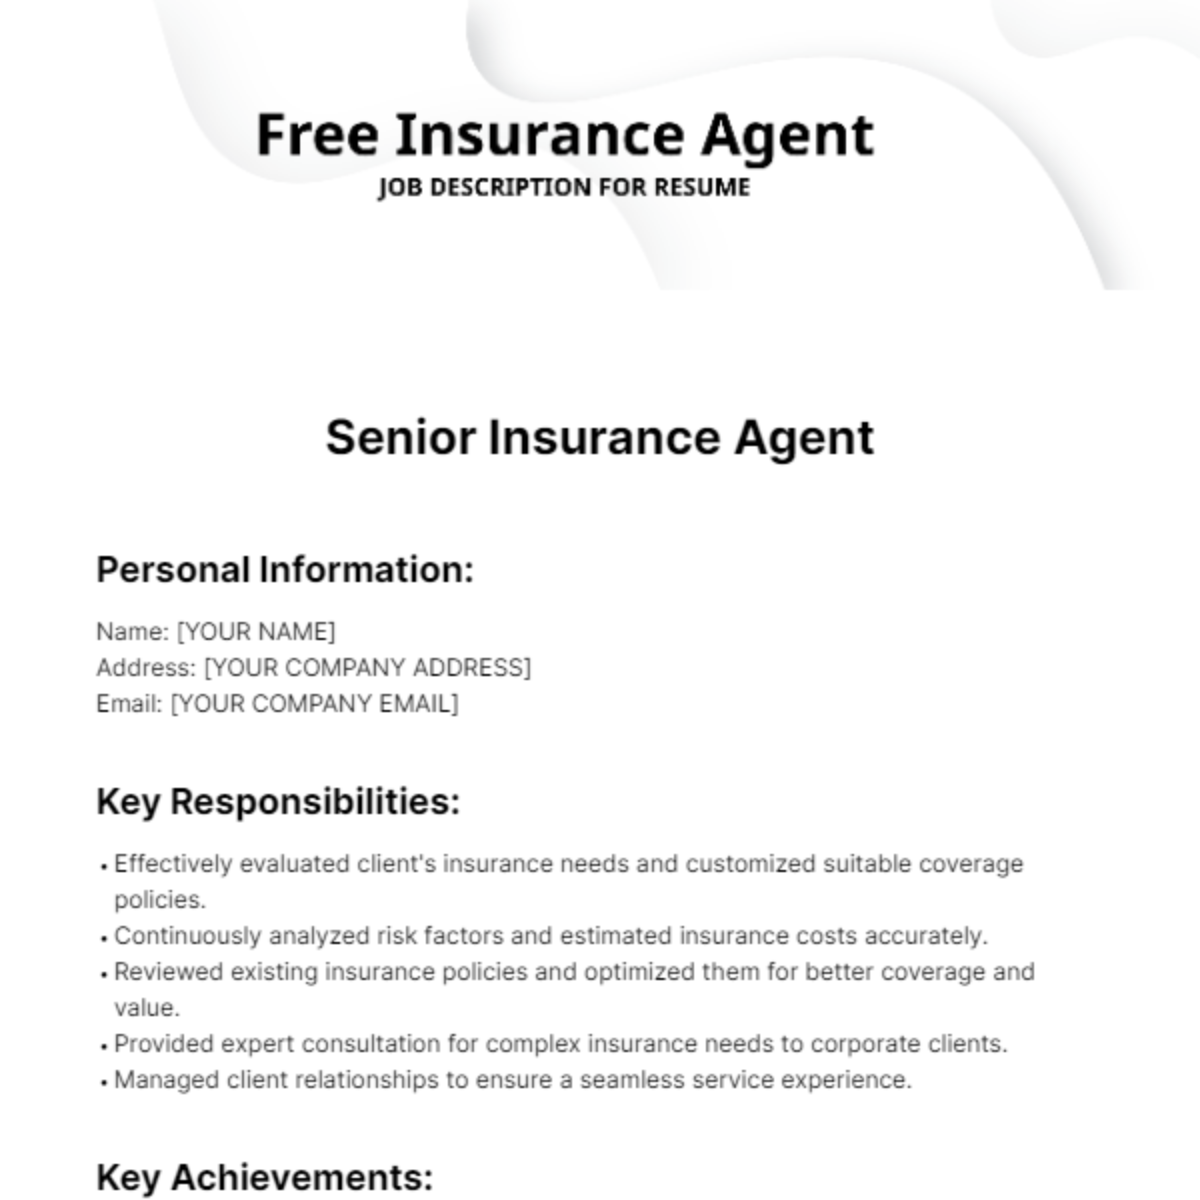 Insurance Agent Job Description for Resume Template